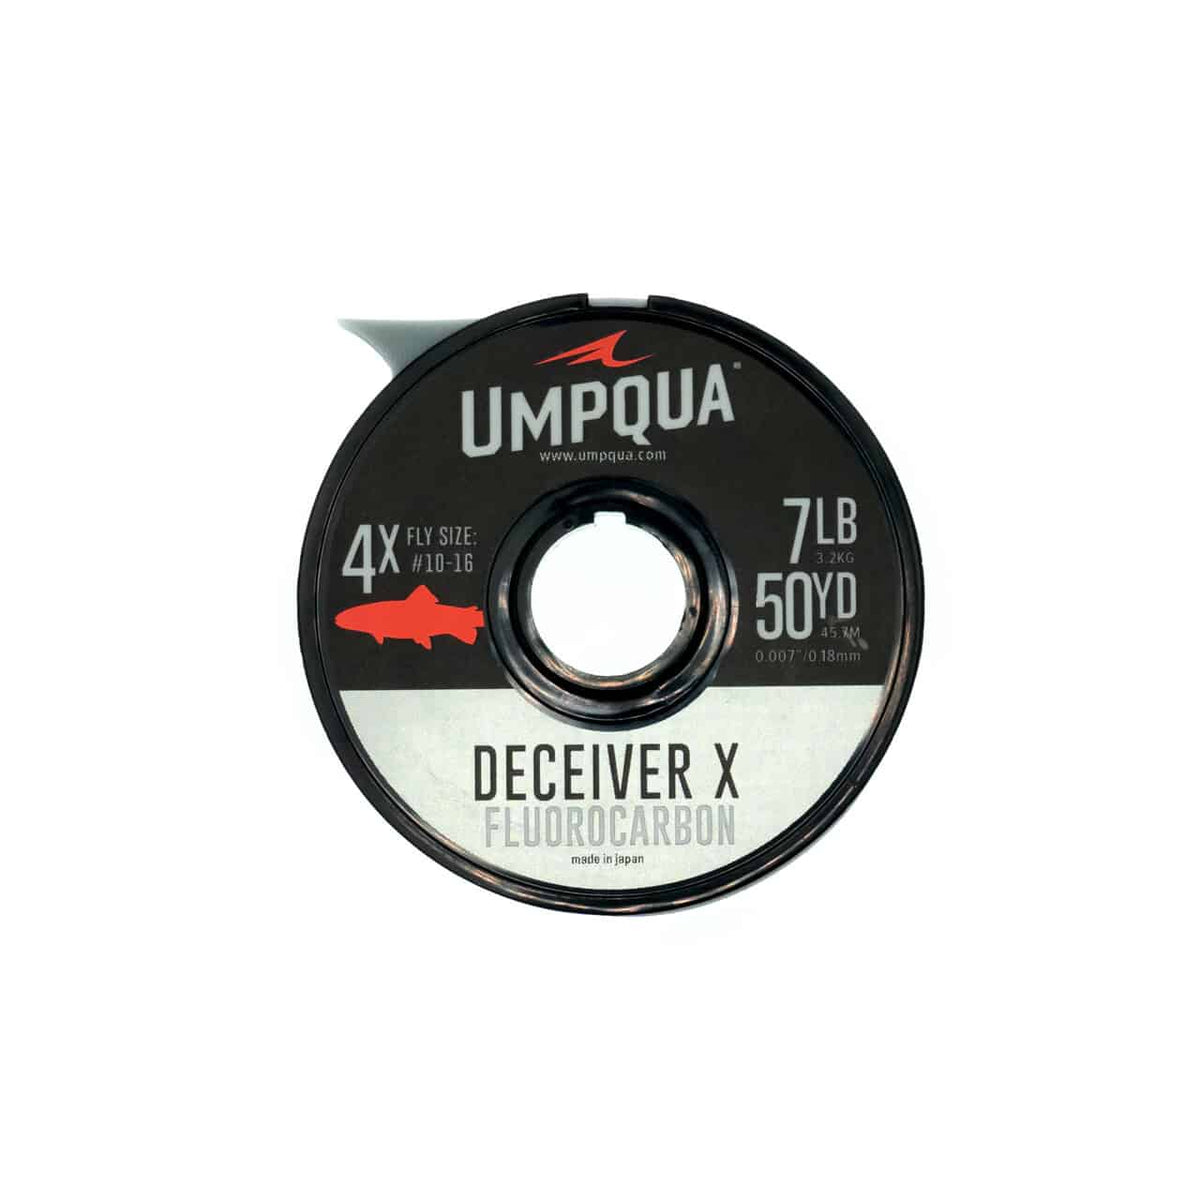 Umpqua Deceiver X Fluorocarbon Trout Tippet - 50 Yd. Spool